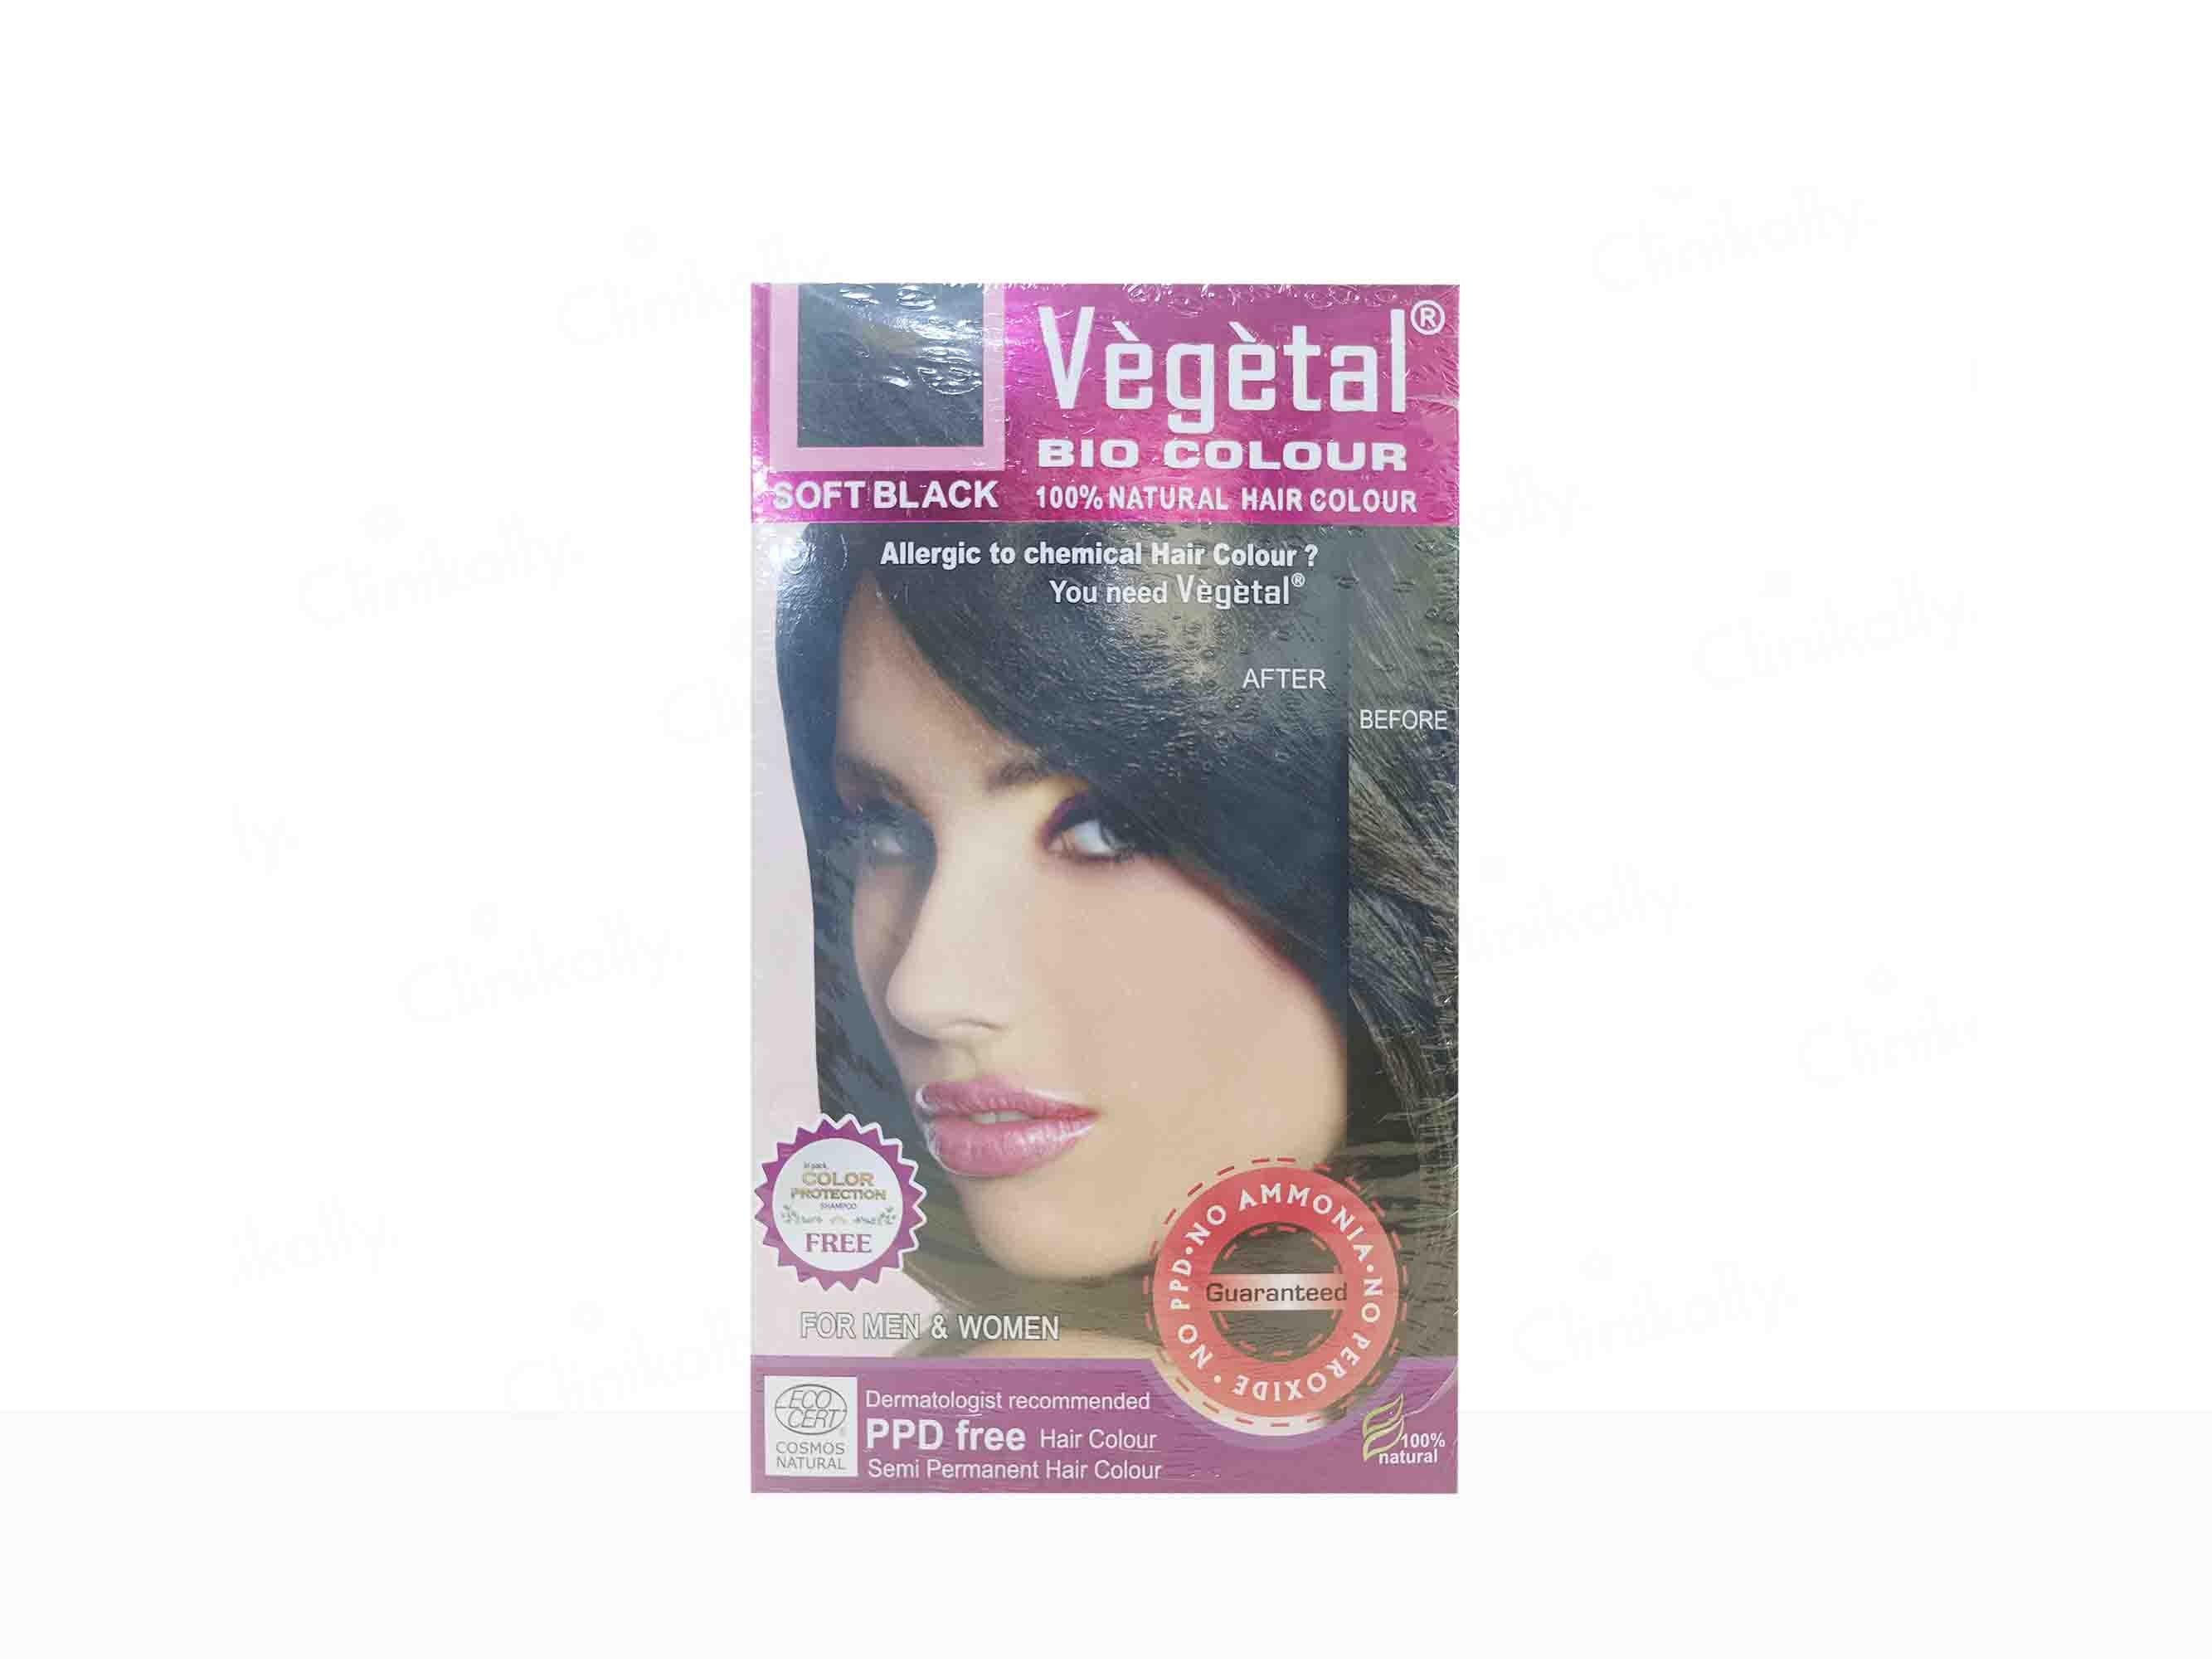 Vegetal Bio Colour 100% Natural Hair Colour For Men & Women - Soft Black